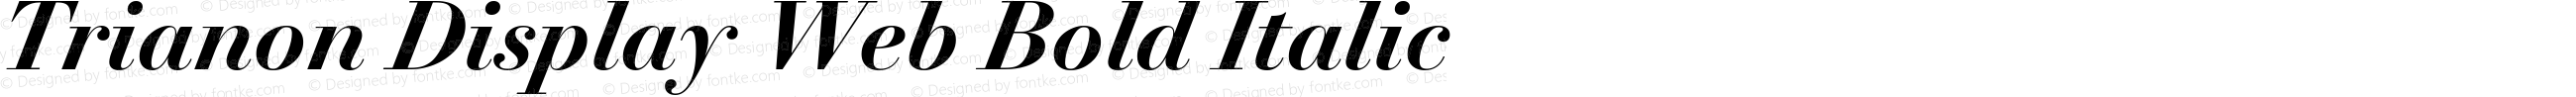 Trianon Display Web Bold Italic